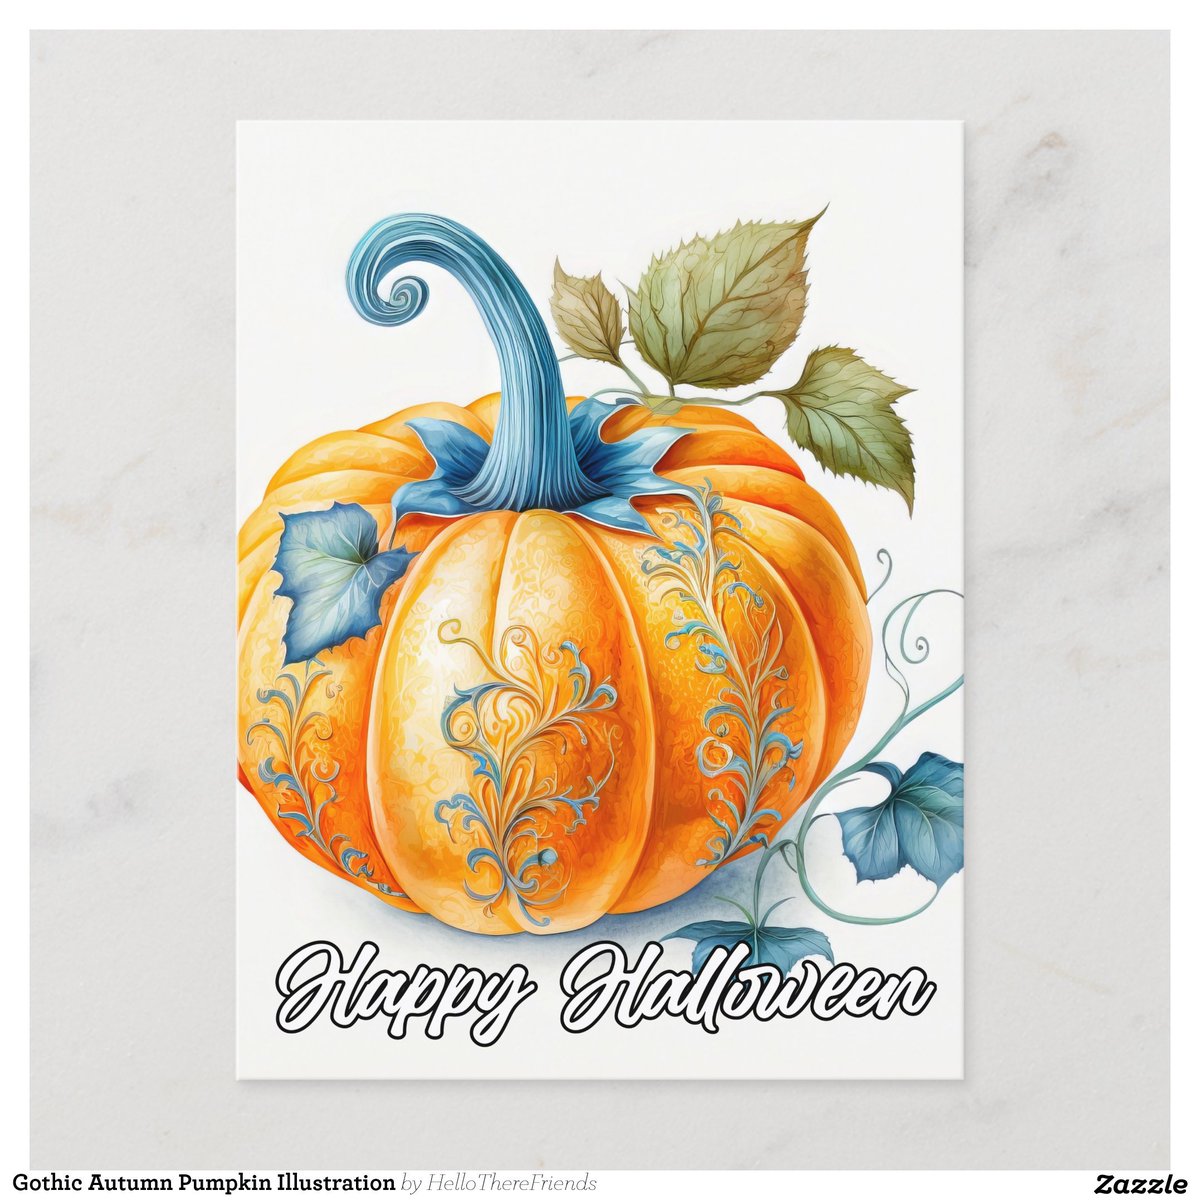 Gothic Autumn Pumpkin Illustration Postcard→zazzle.com/z/8kzdtb8j?rf=…

#Postcards #Hello #Stationery #HappyHalloween #Halloween #Pumpkins #Halloween2024 #TrickOrTreat #Gothic #Illustration #Art #Zazzle